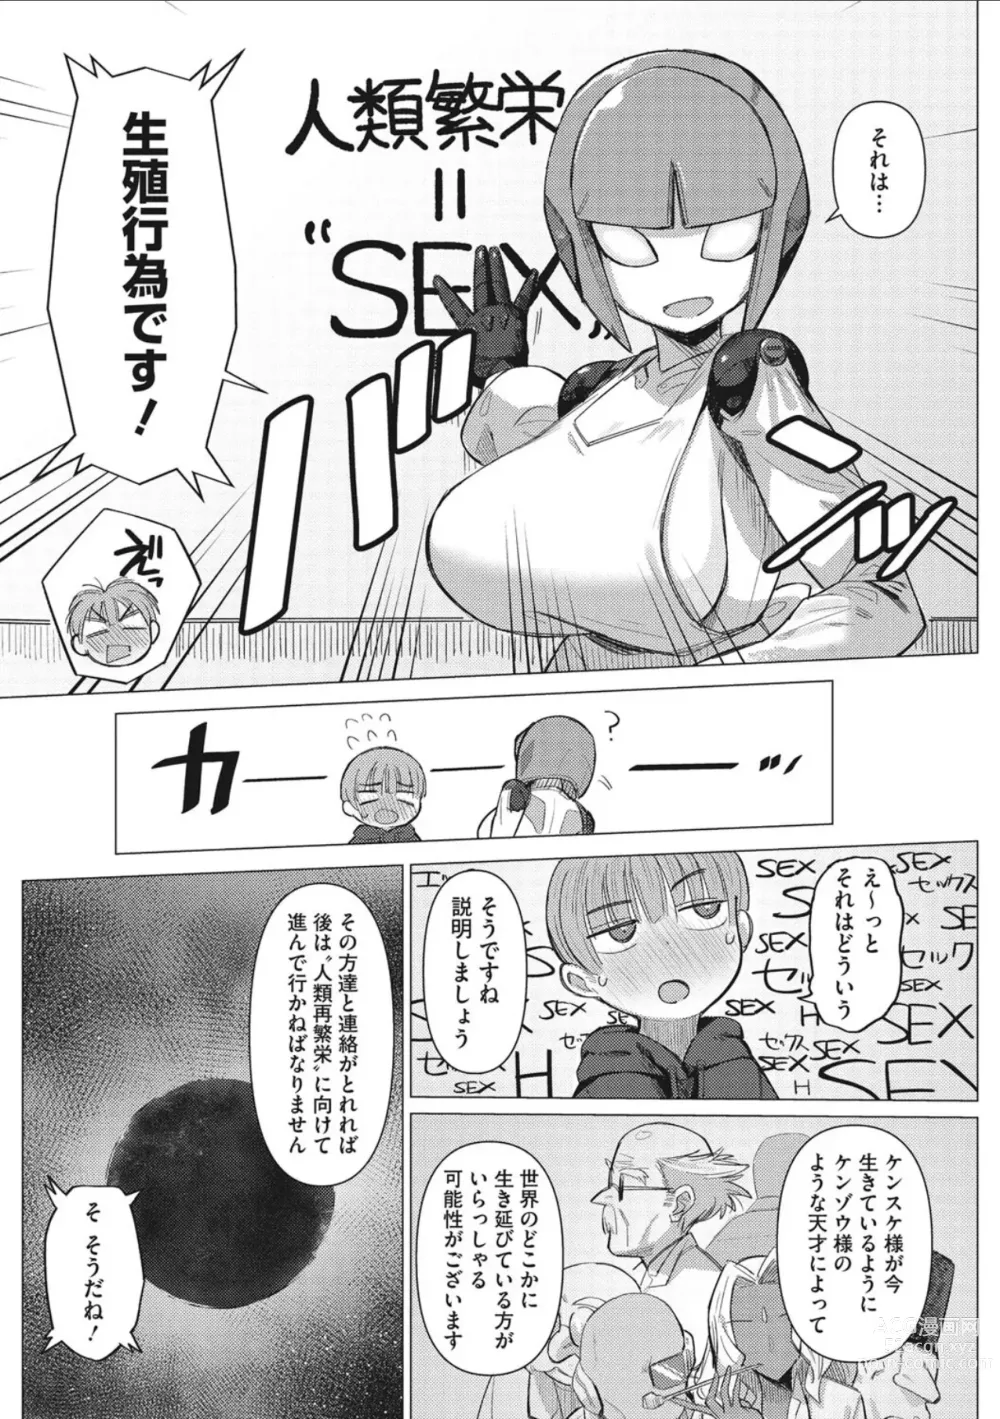 Page 7 of manga COMIC GAIRA Vol. 10